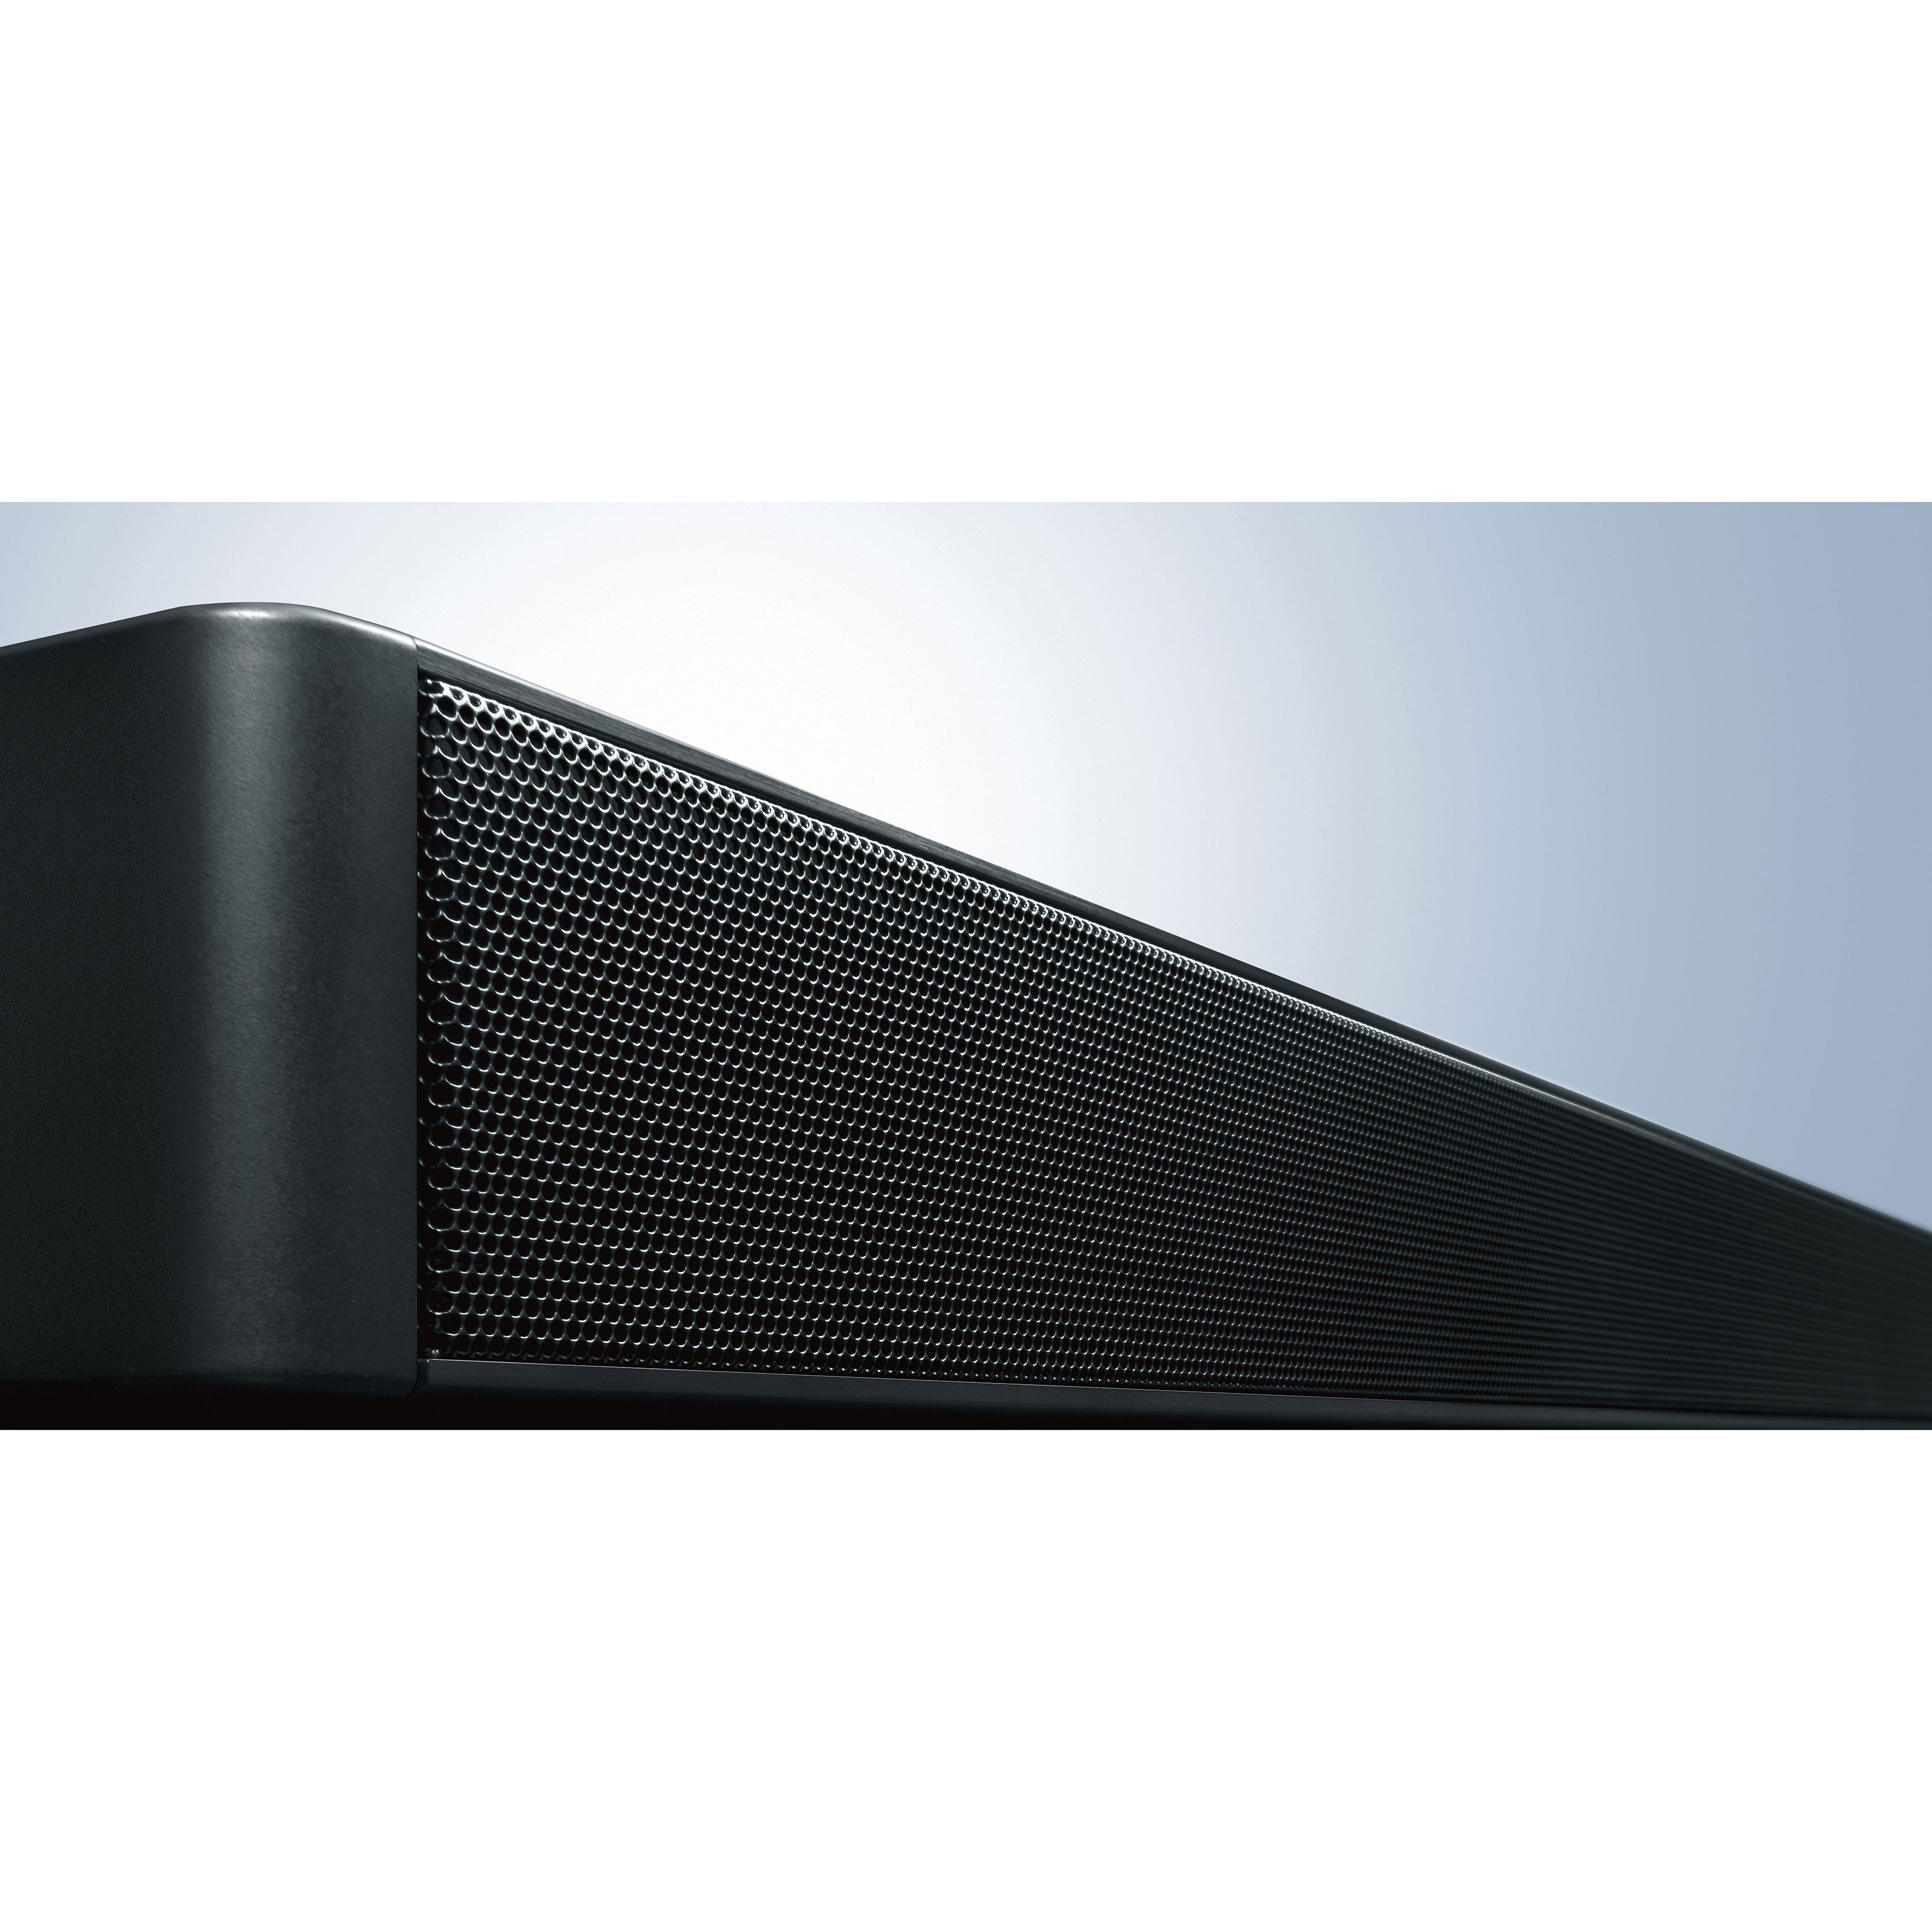 YSP-2700 - Overview - Sound Bars - Audio & Visual - Yamaha USA